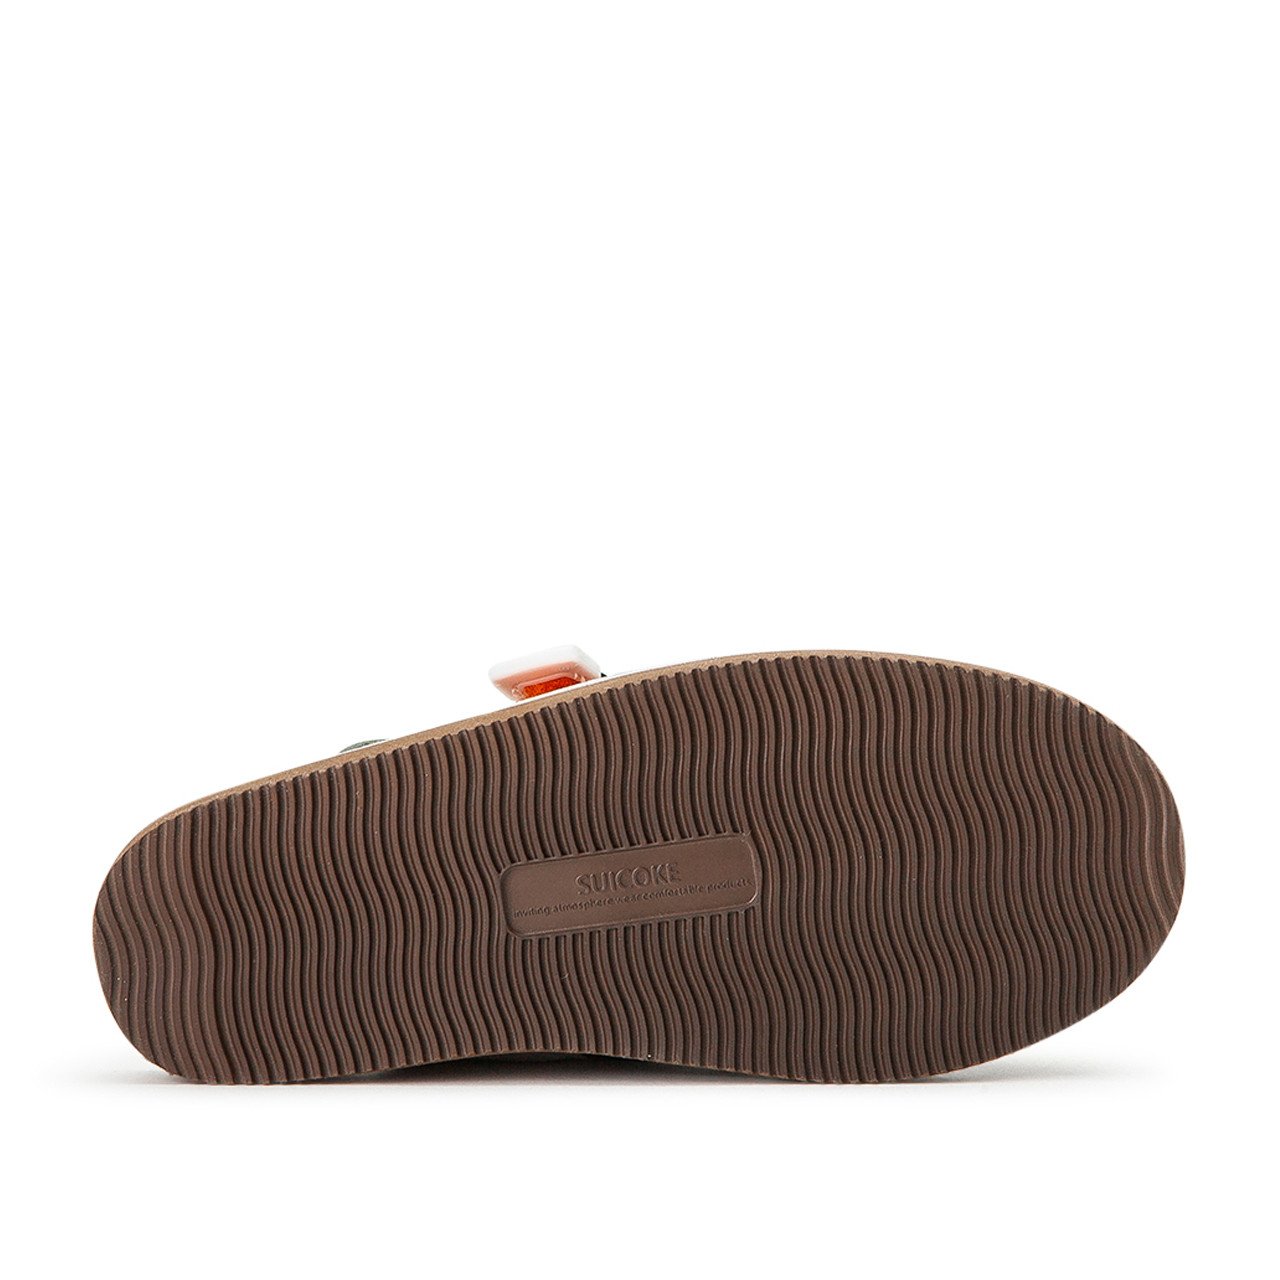 suicoke sandals zavo-mab (grey) - og-072mab-102 - a.plus - Image - 5